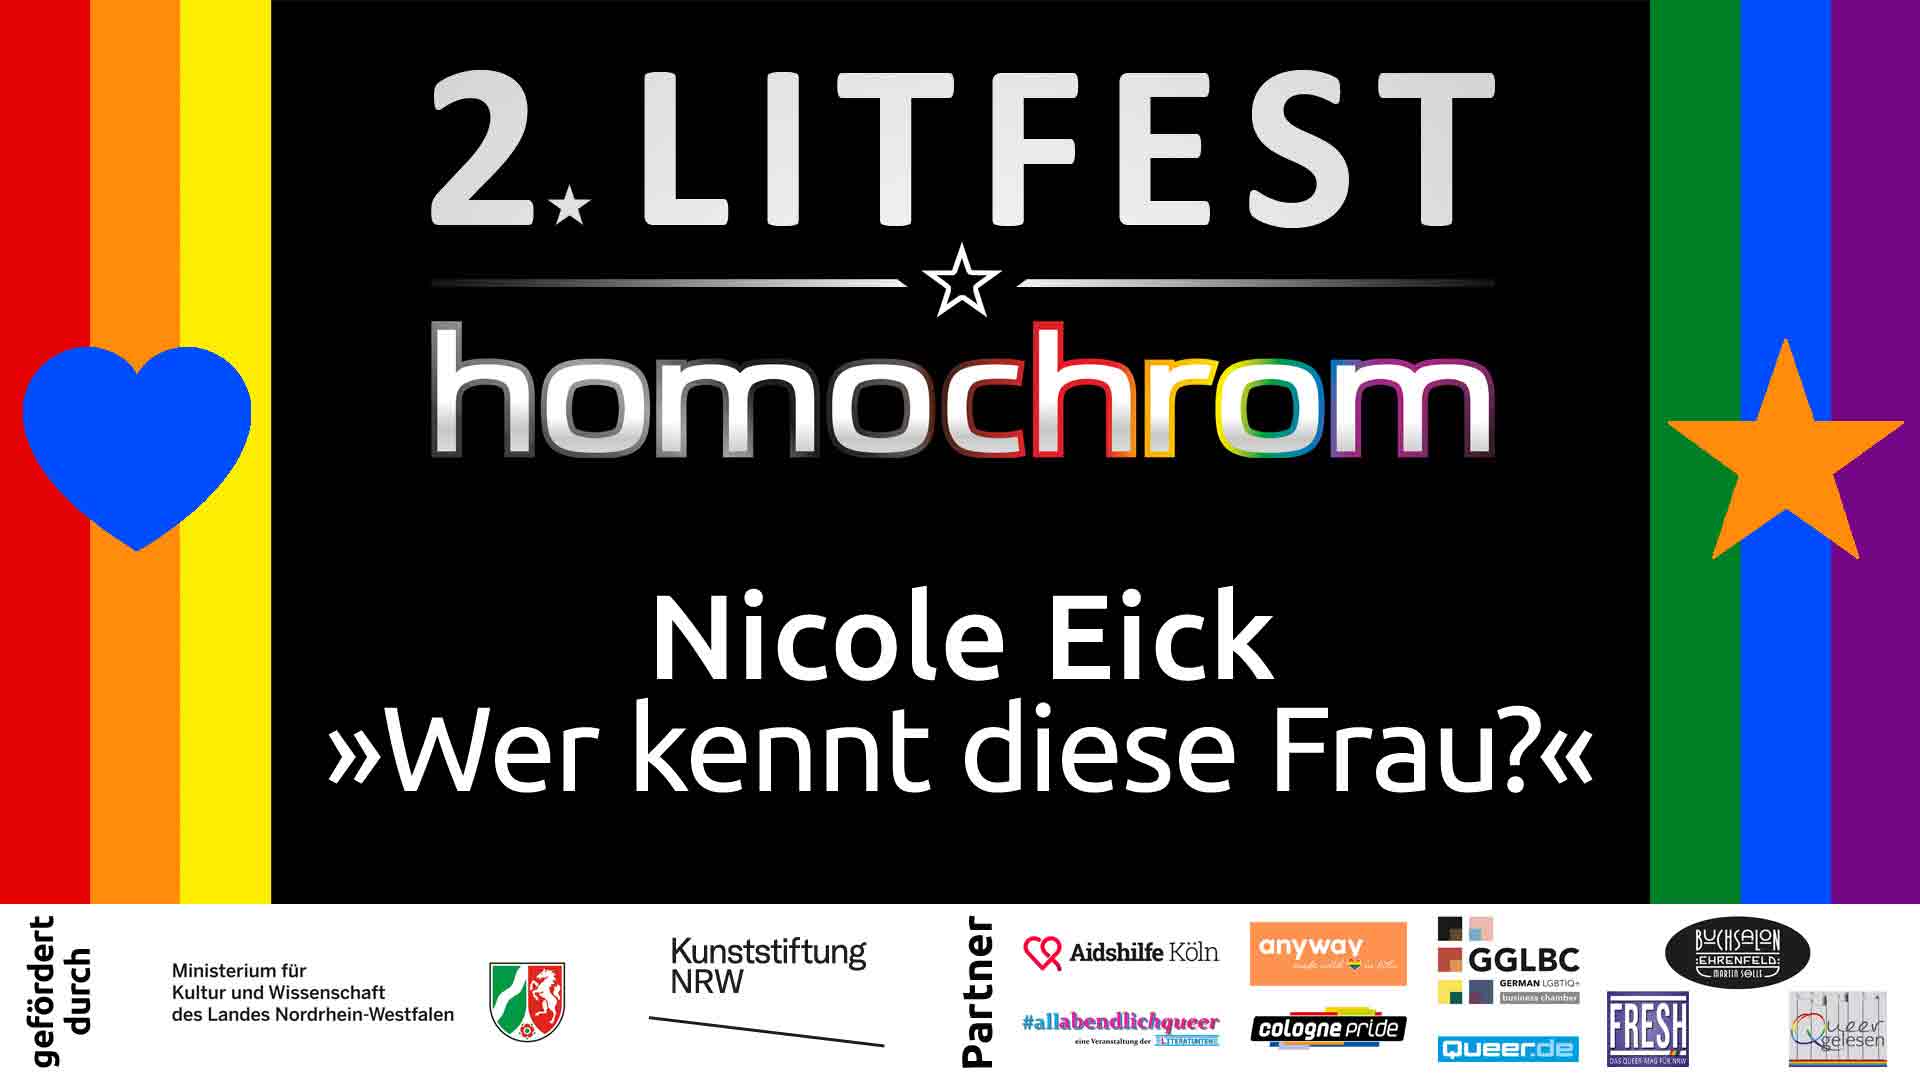 Youtube Video, Nicole Eick, 2. Litfest homochrom